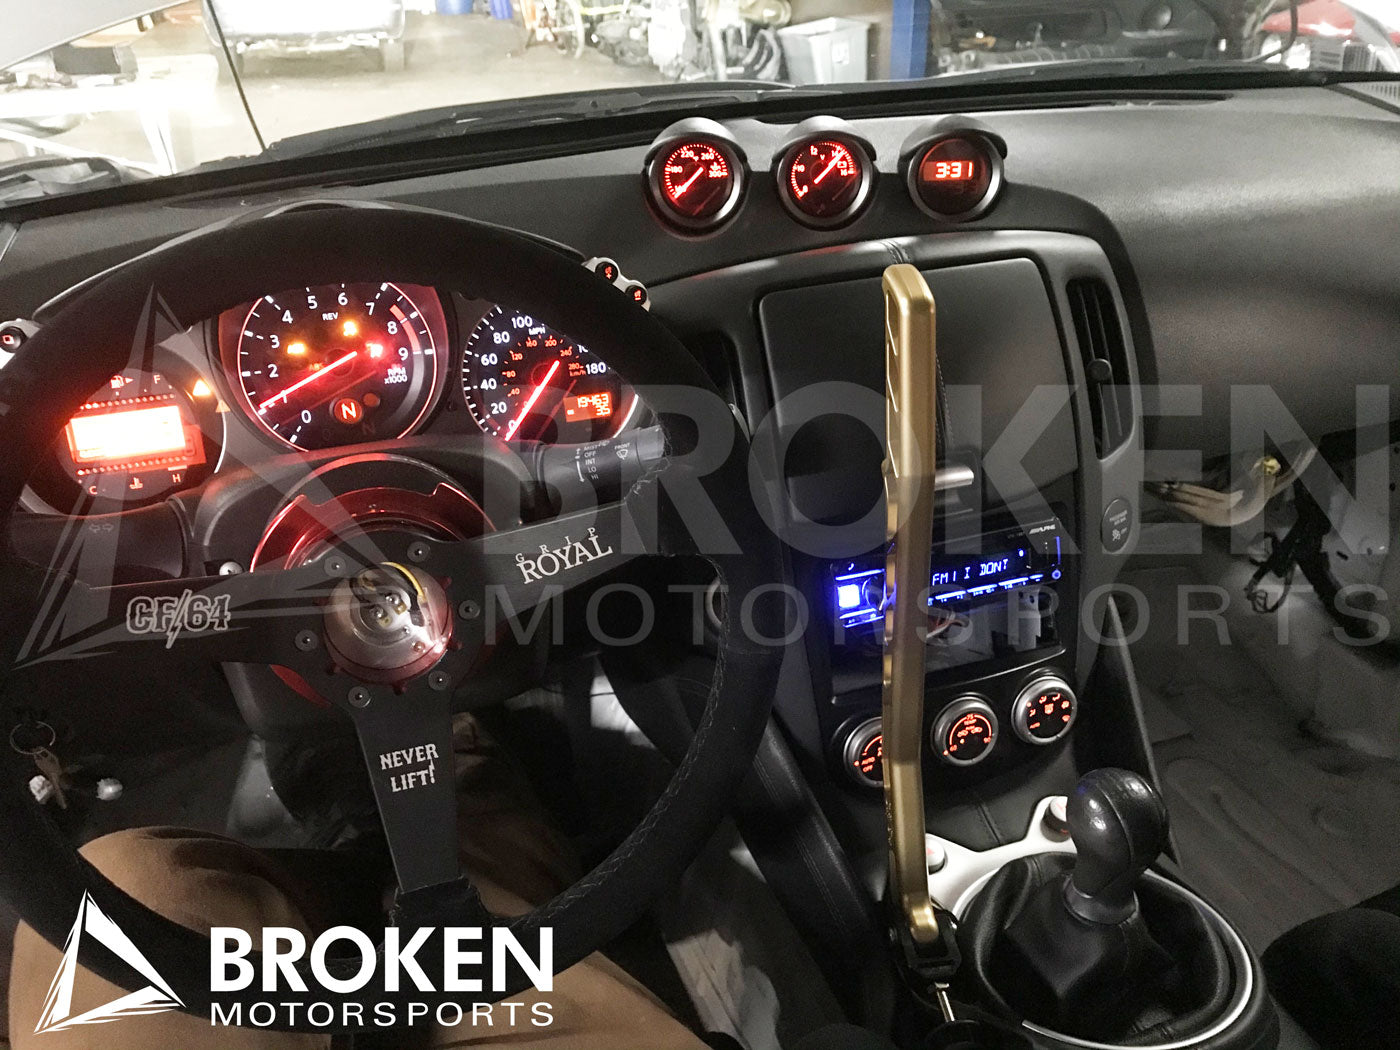 Broken Motorsports - Nissan 370Z - Hydraulic Handbrake Mount  Edit alt text